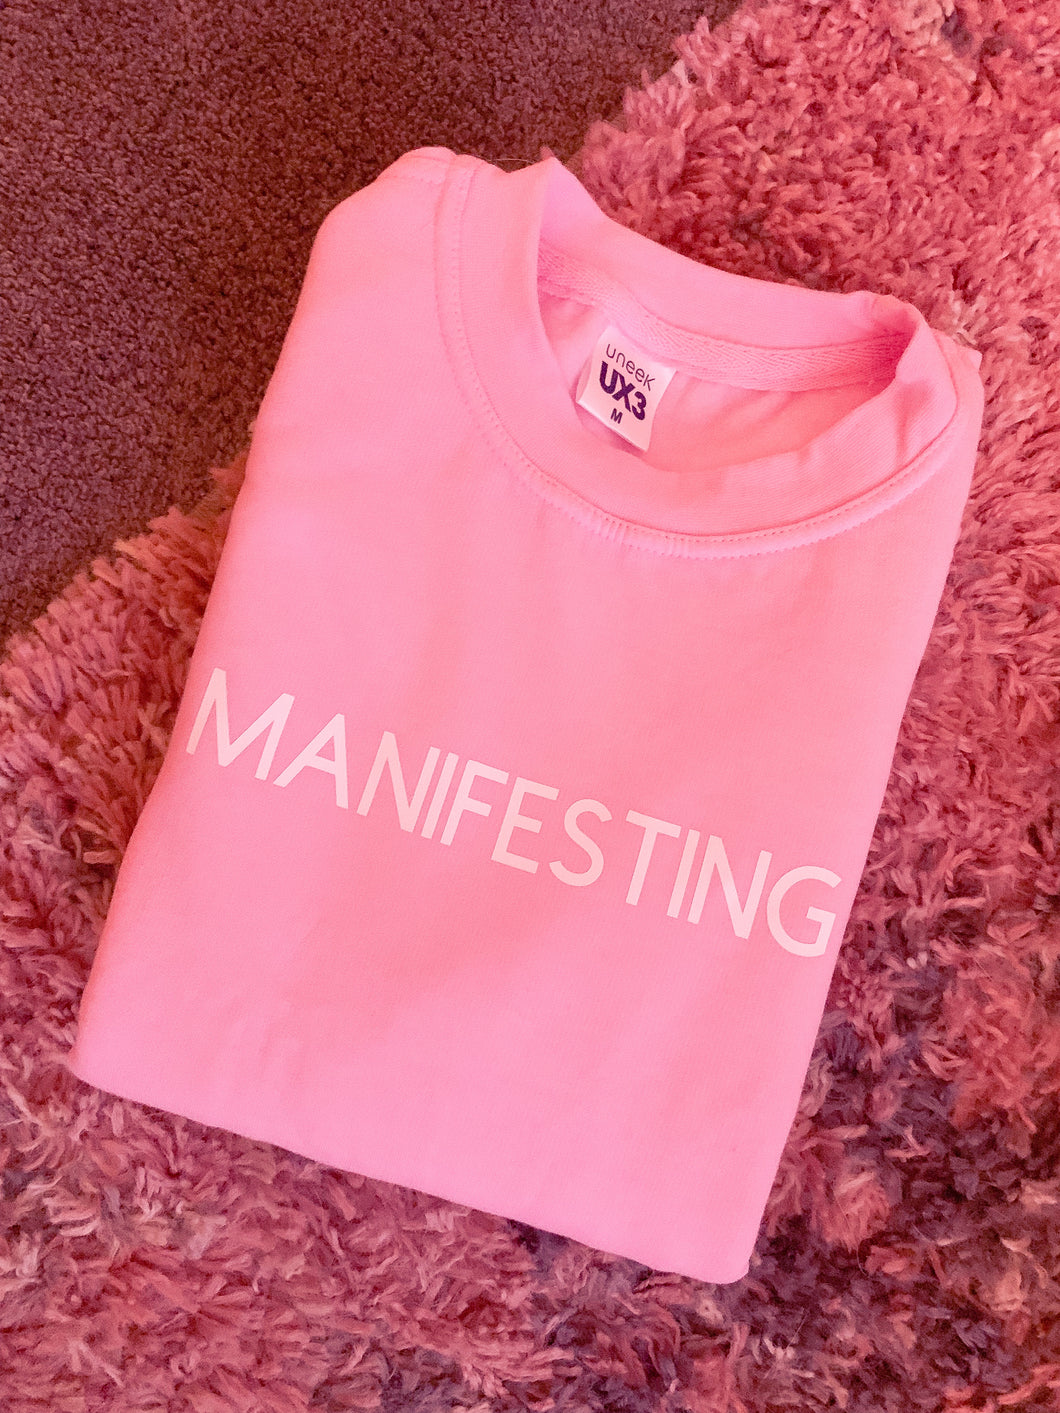 Manifesting sweatshirt